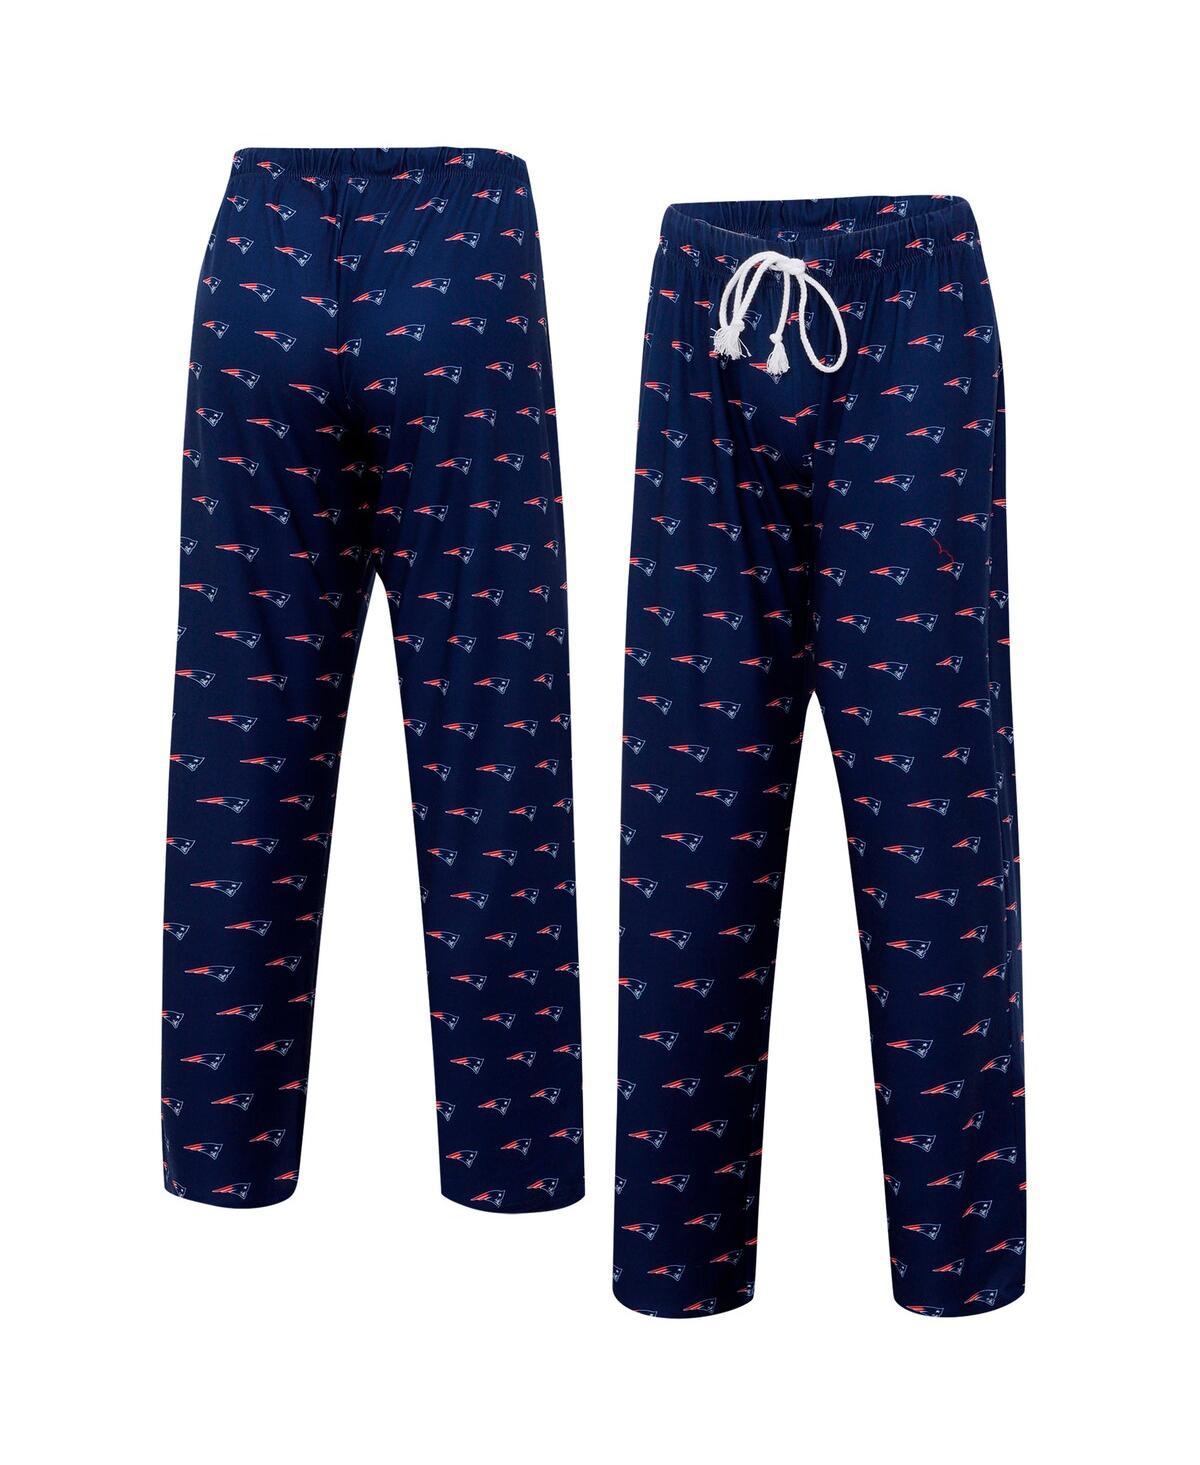 Shop Concepts Sport Women's  Navy New England Patriots Gauge Allover Print Sleep Pants